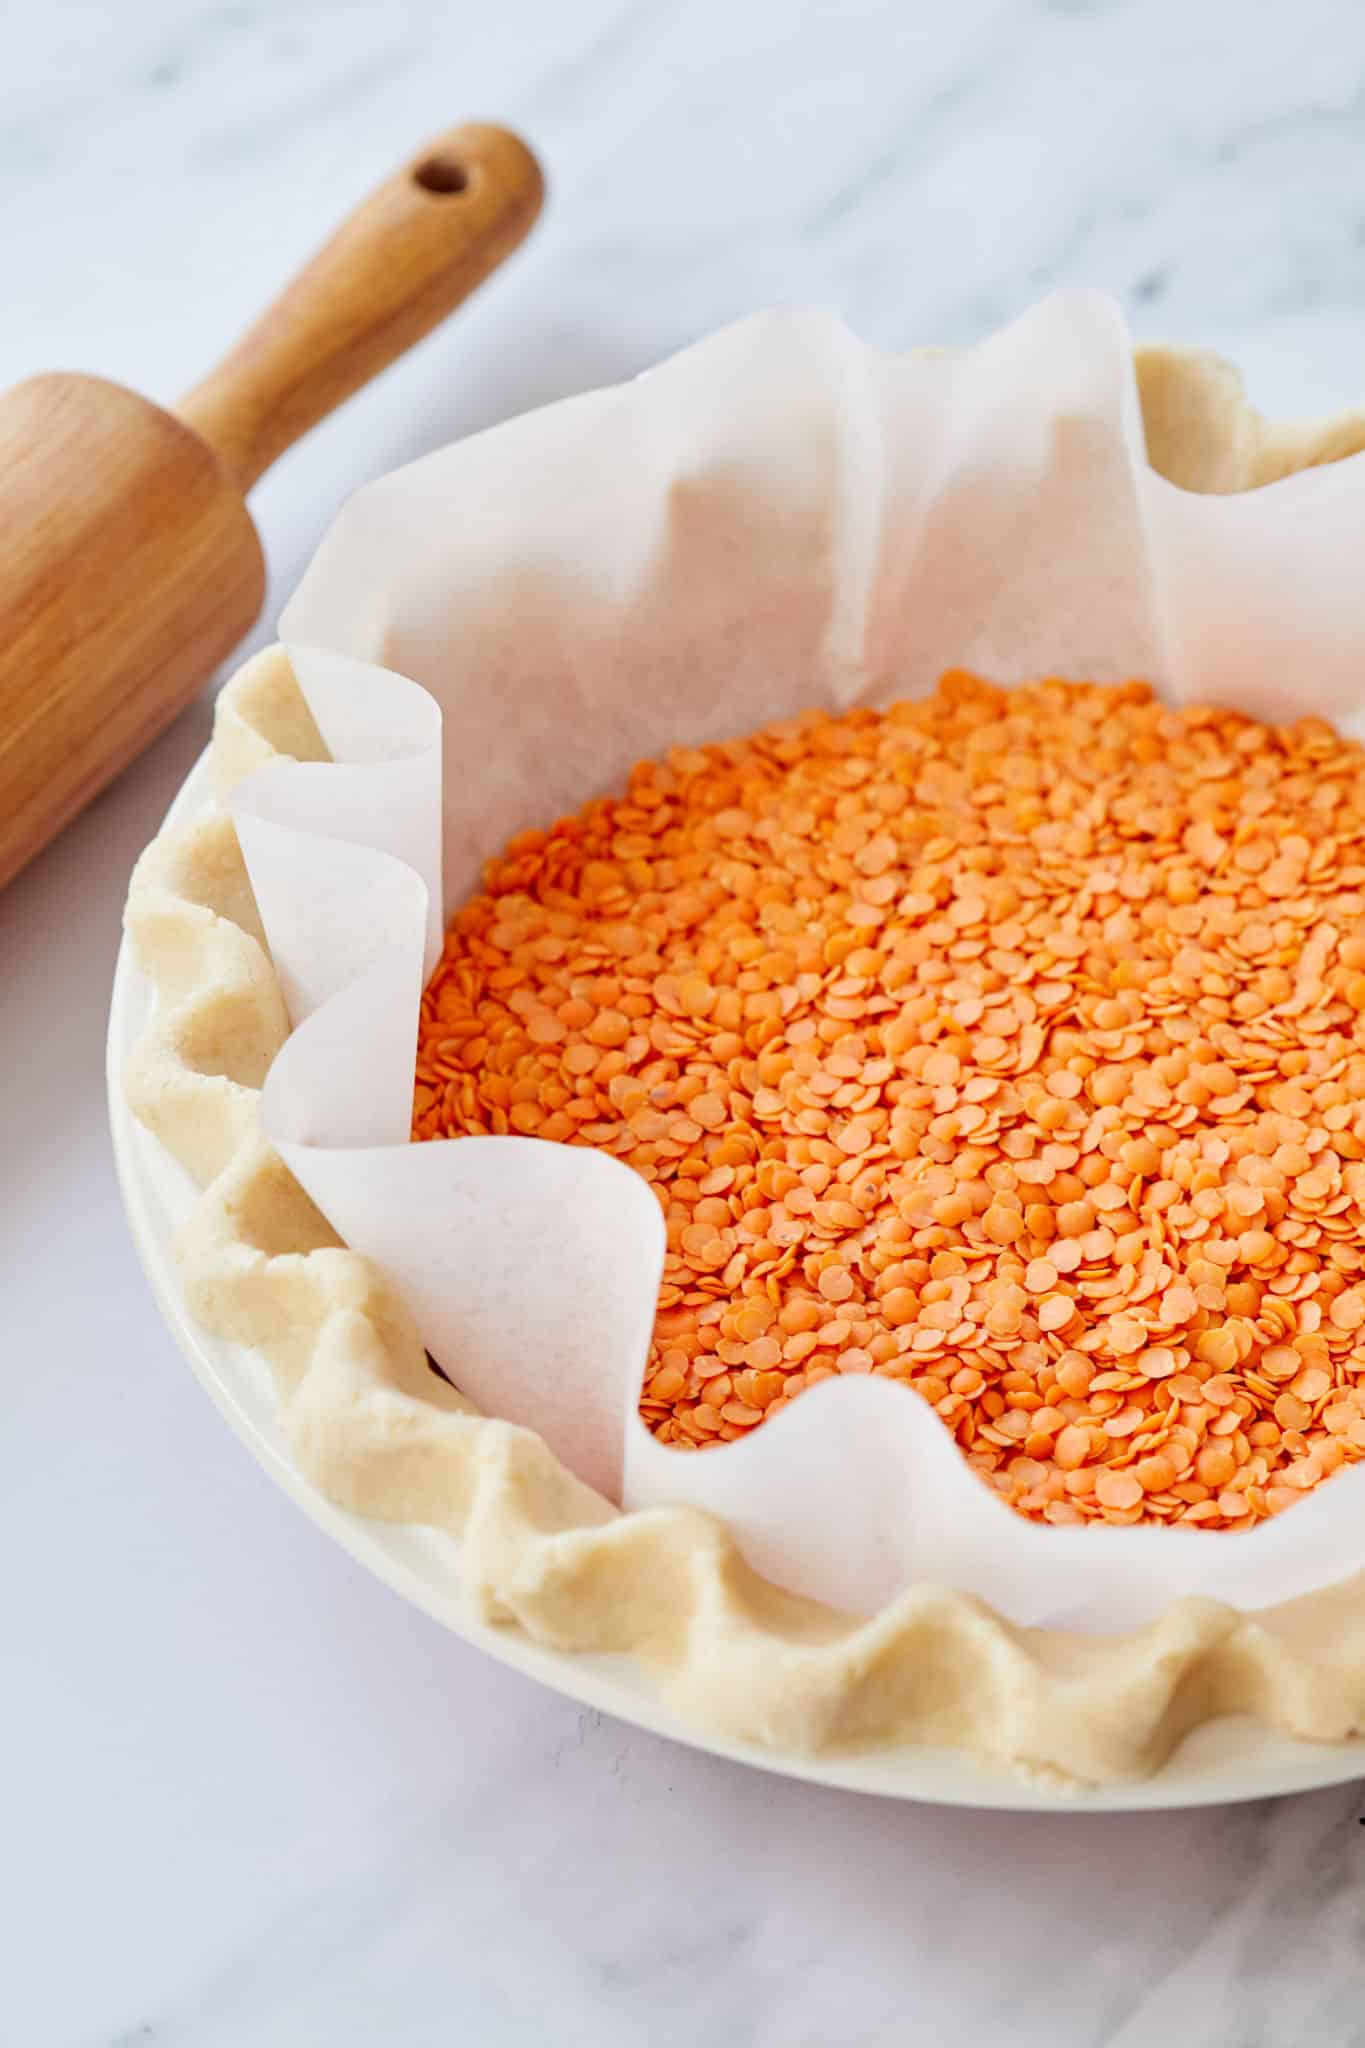 A pie crust filled with lentils for par-baking, or blind-baking.